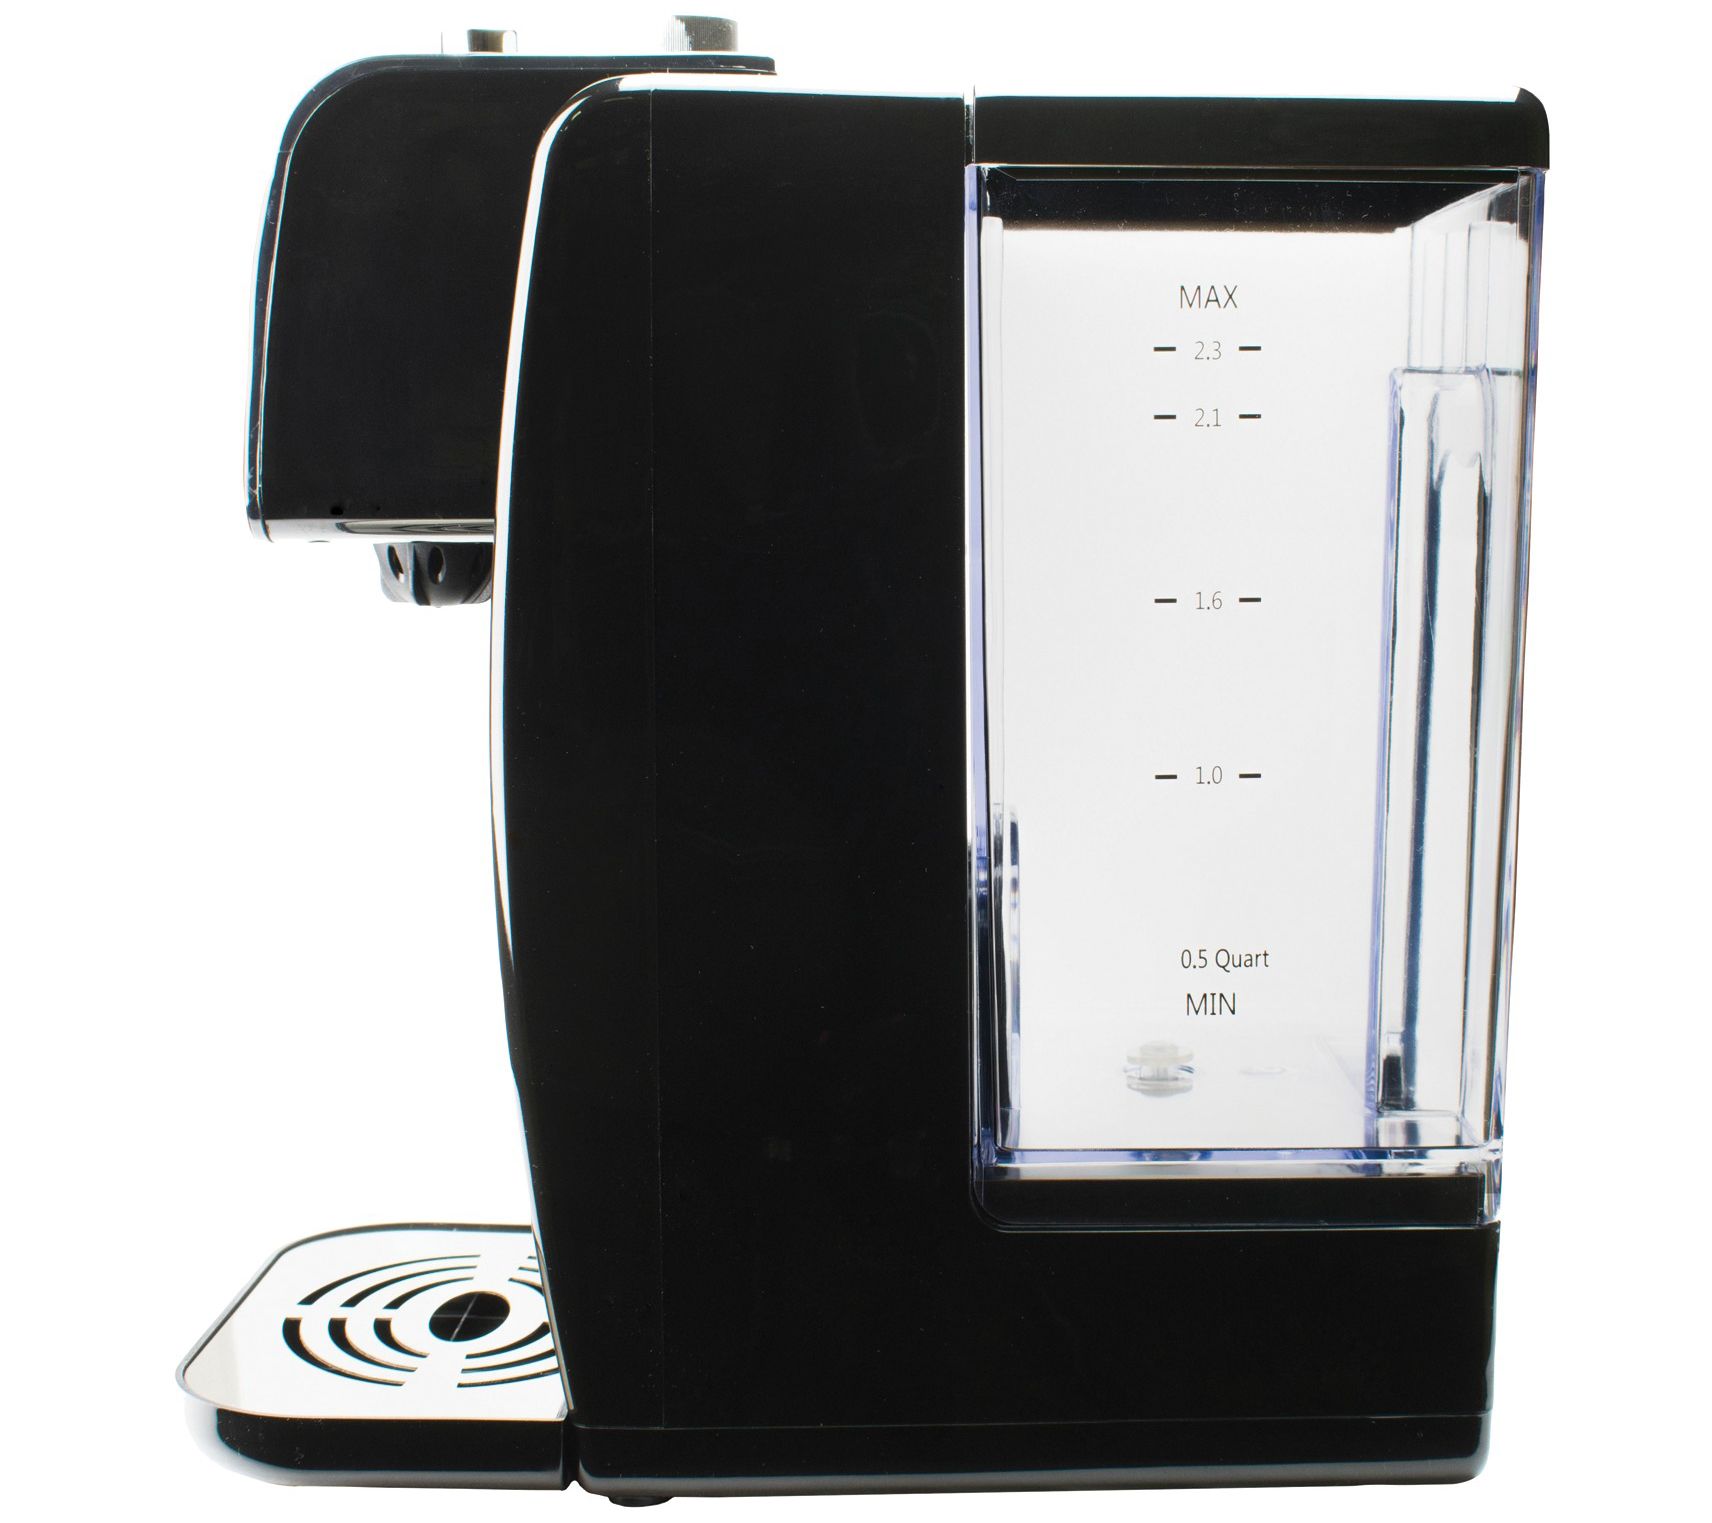 Sunpentown 3.2L Hot Water Dispenser with Multi Temp Feature